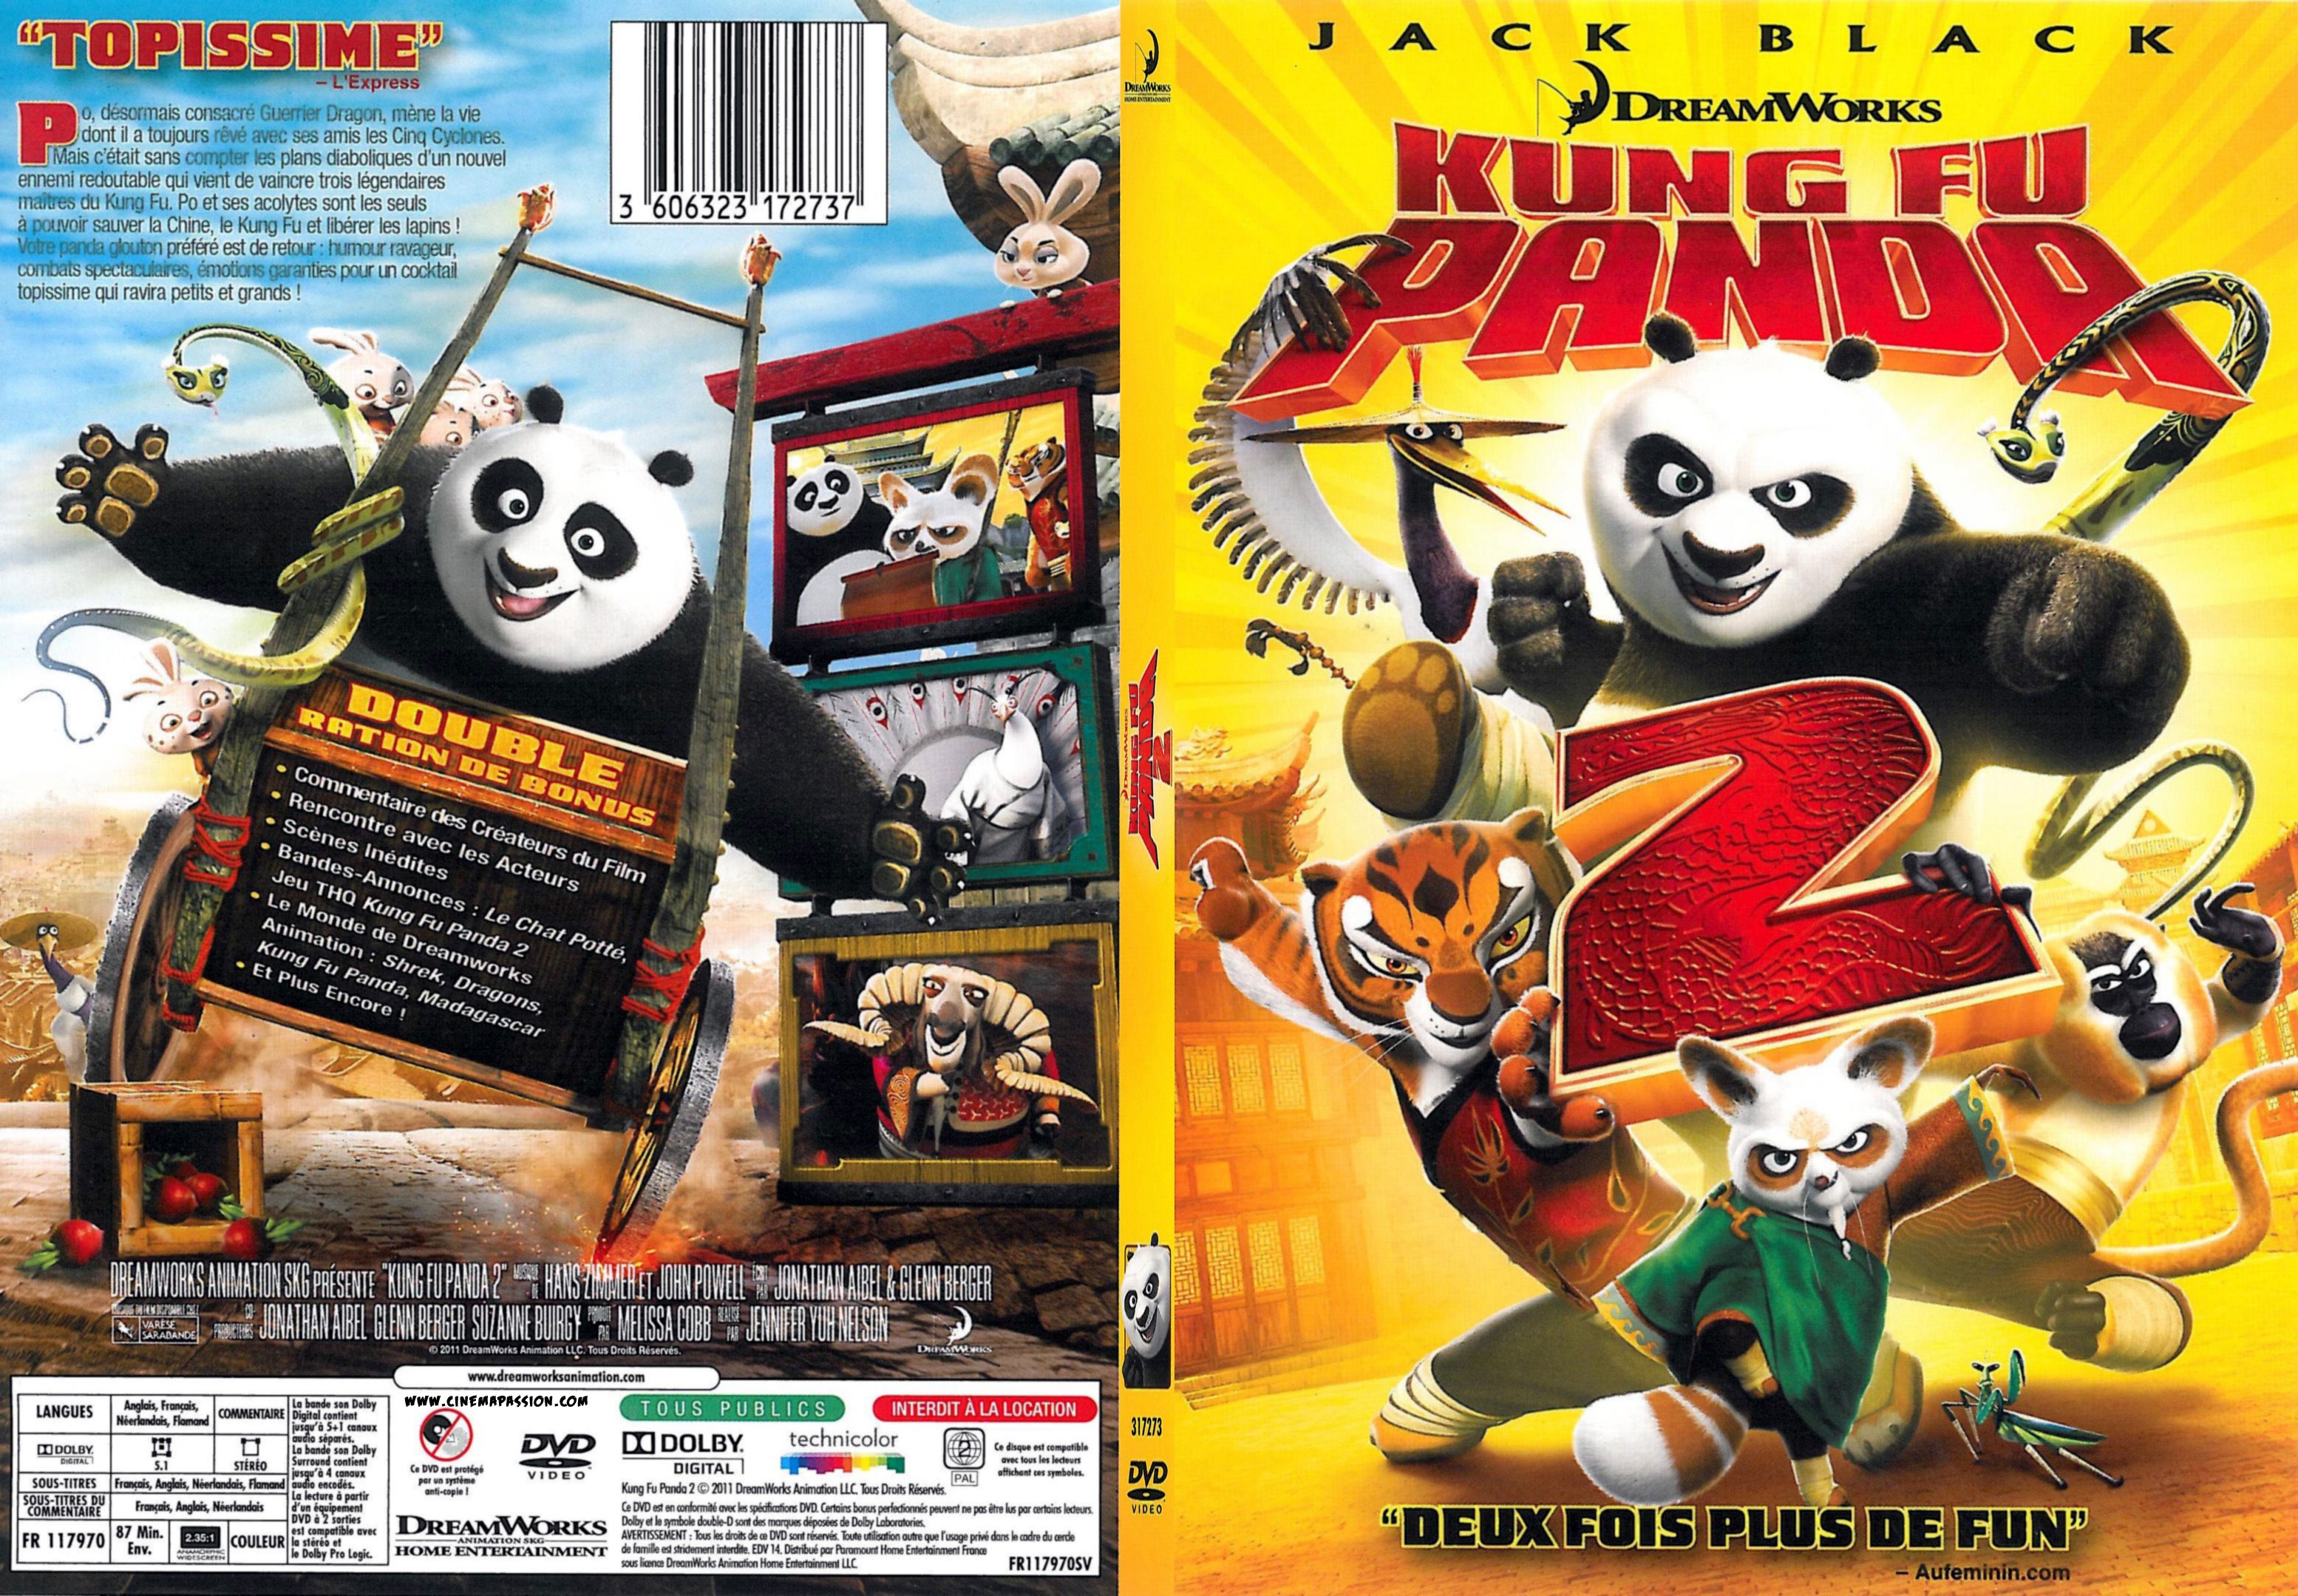 Jaquette DVD Kung fu panda 2 - SLIM